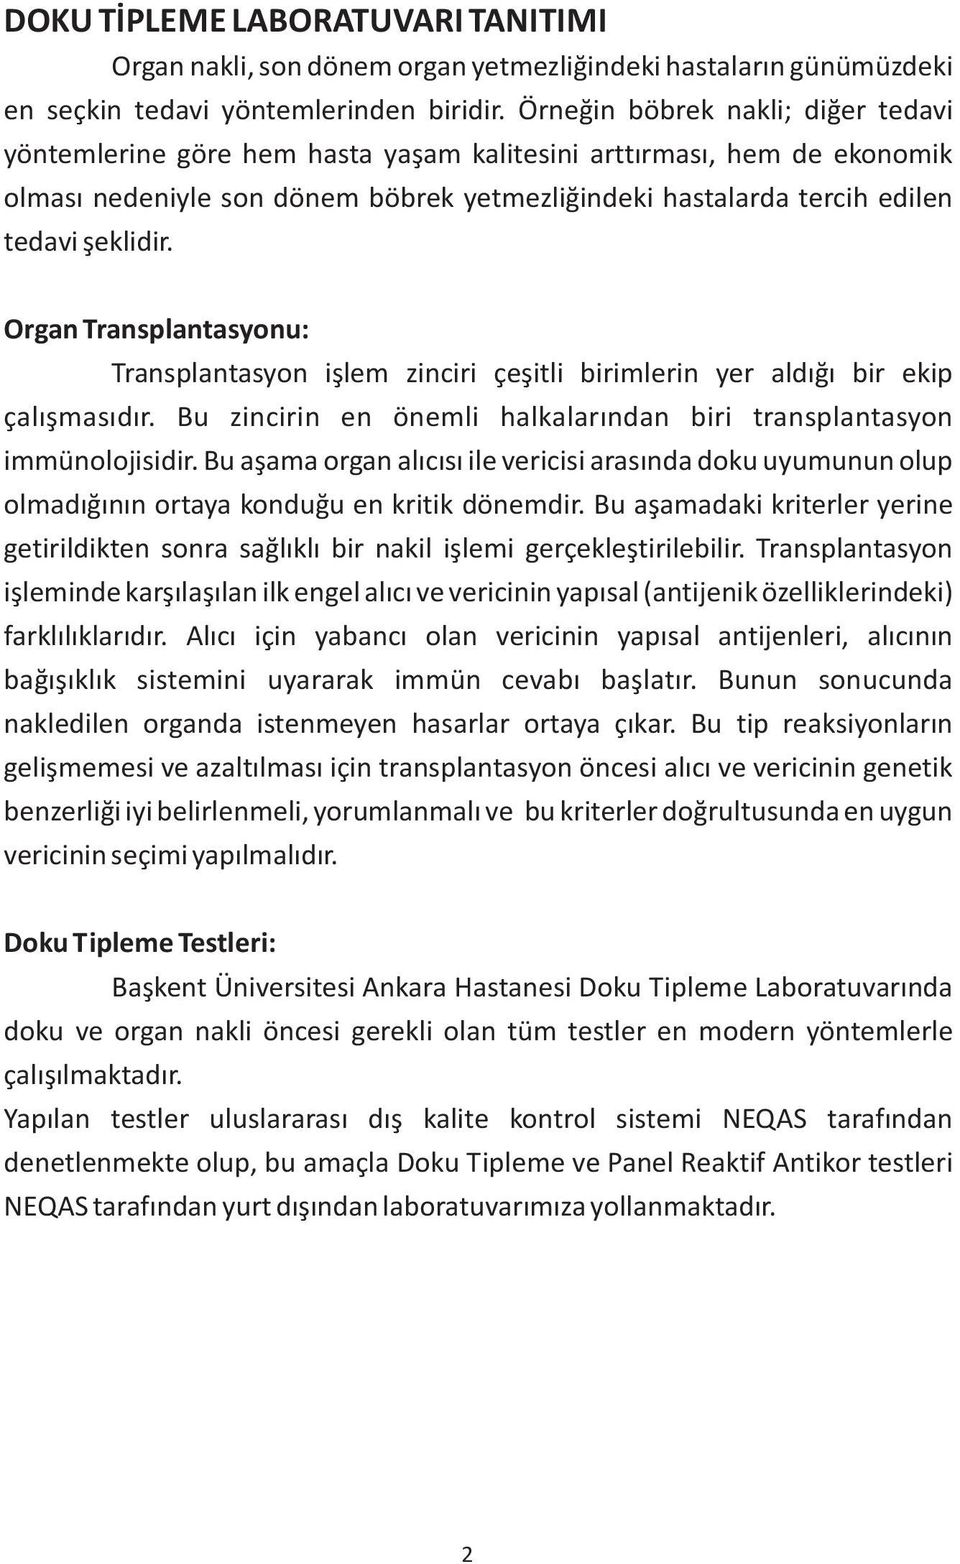 Organ Transplantasyonu: Transplantasyon iþlem zinciri çeþitli birimlerin yer aldýðý bir ekip çalýþmasýdýr. Bu zincirin en önemli halkalarýndan biri transplantasyon immünolojisidir.